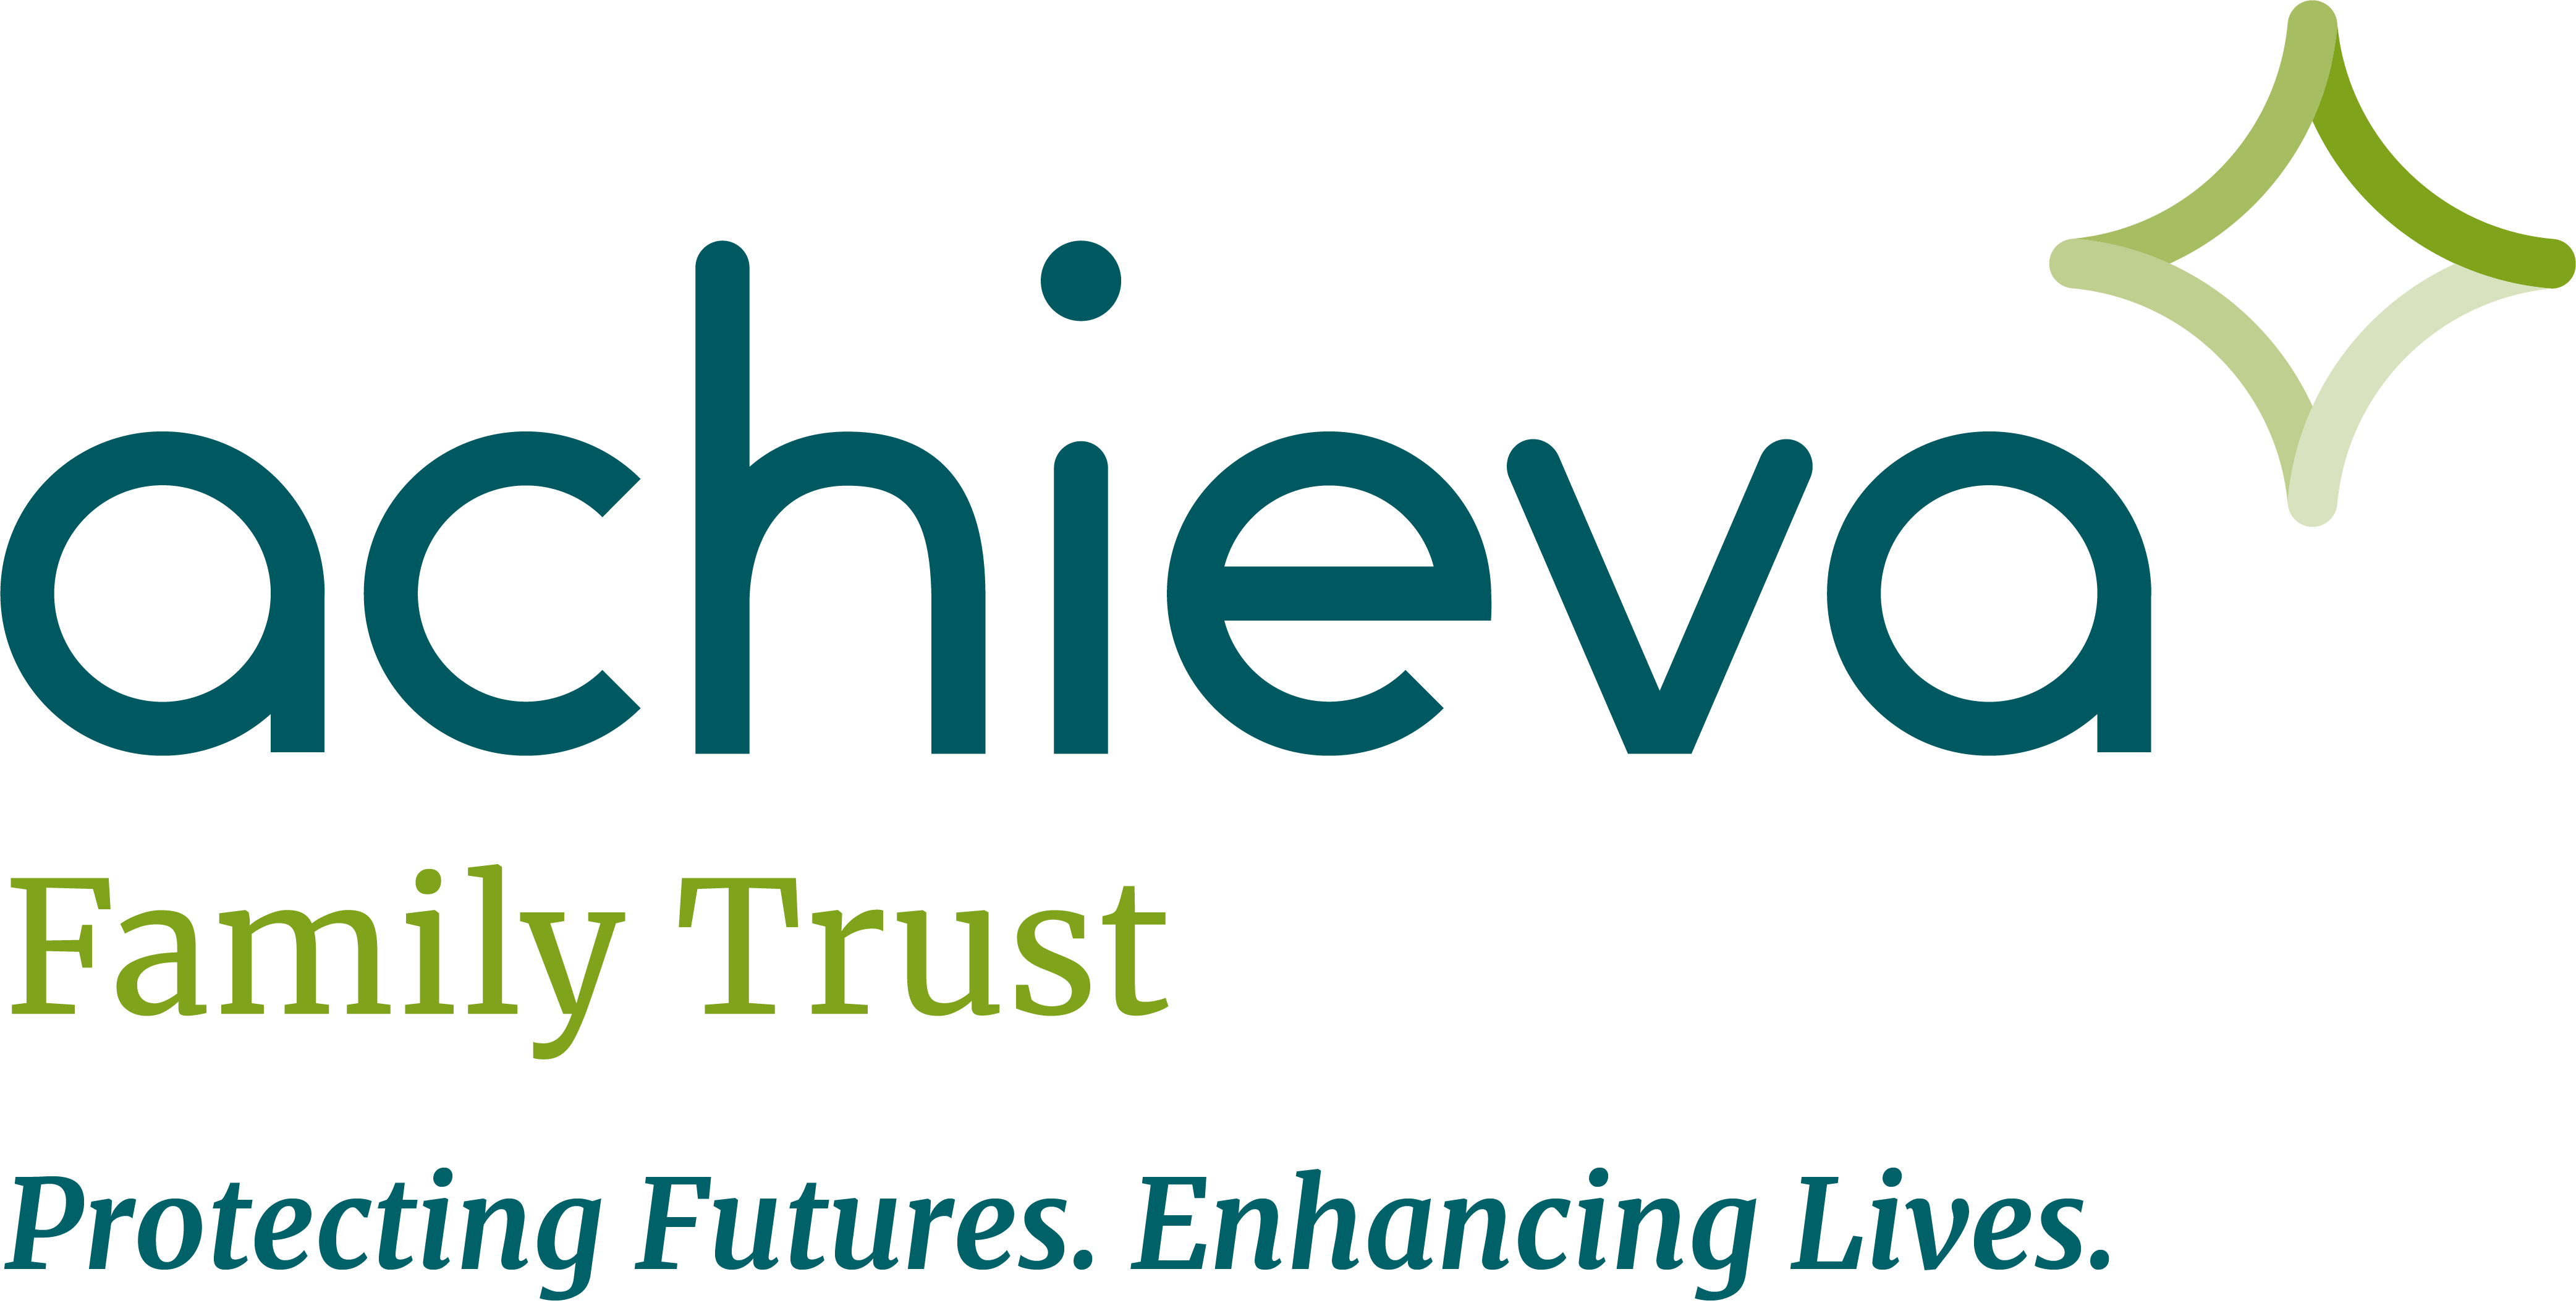 Achieva Family Trust logo